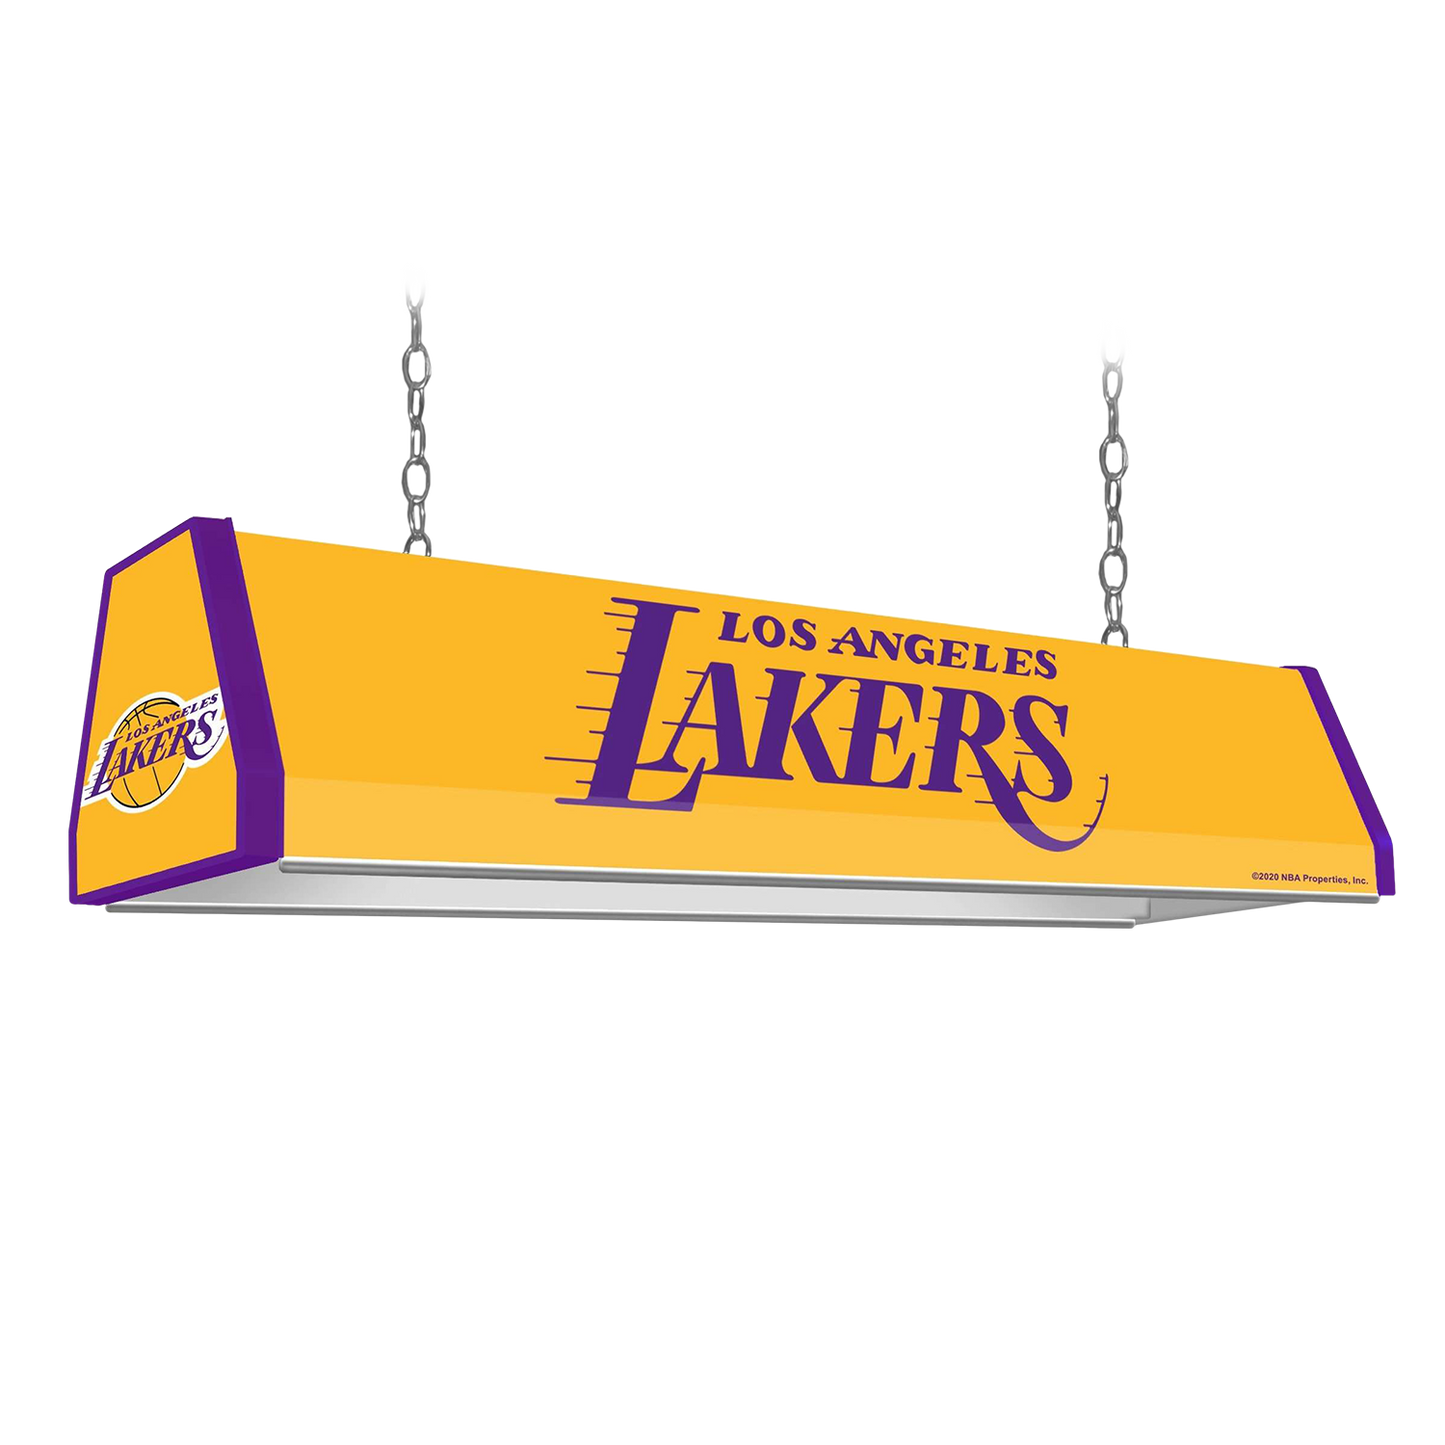 Los Angeles Lakers Standard Pool Table Light